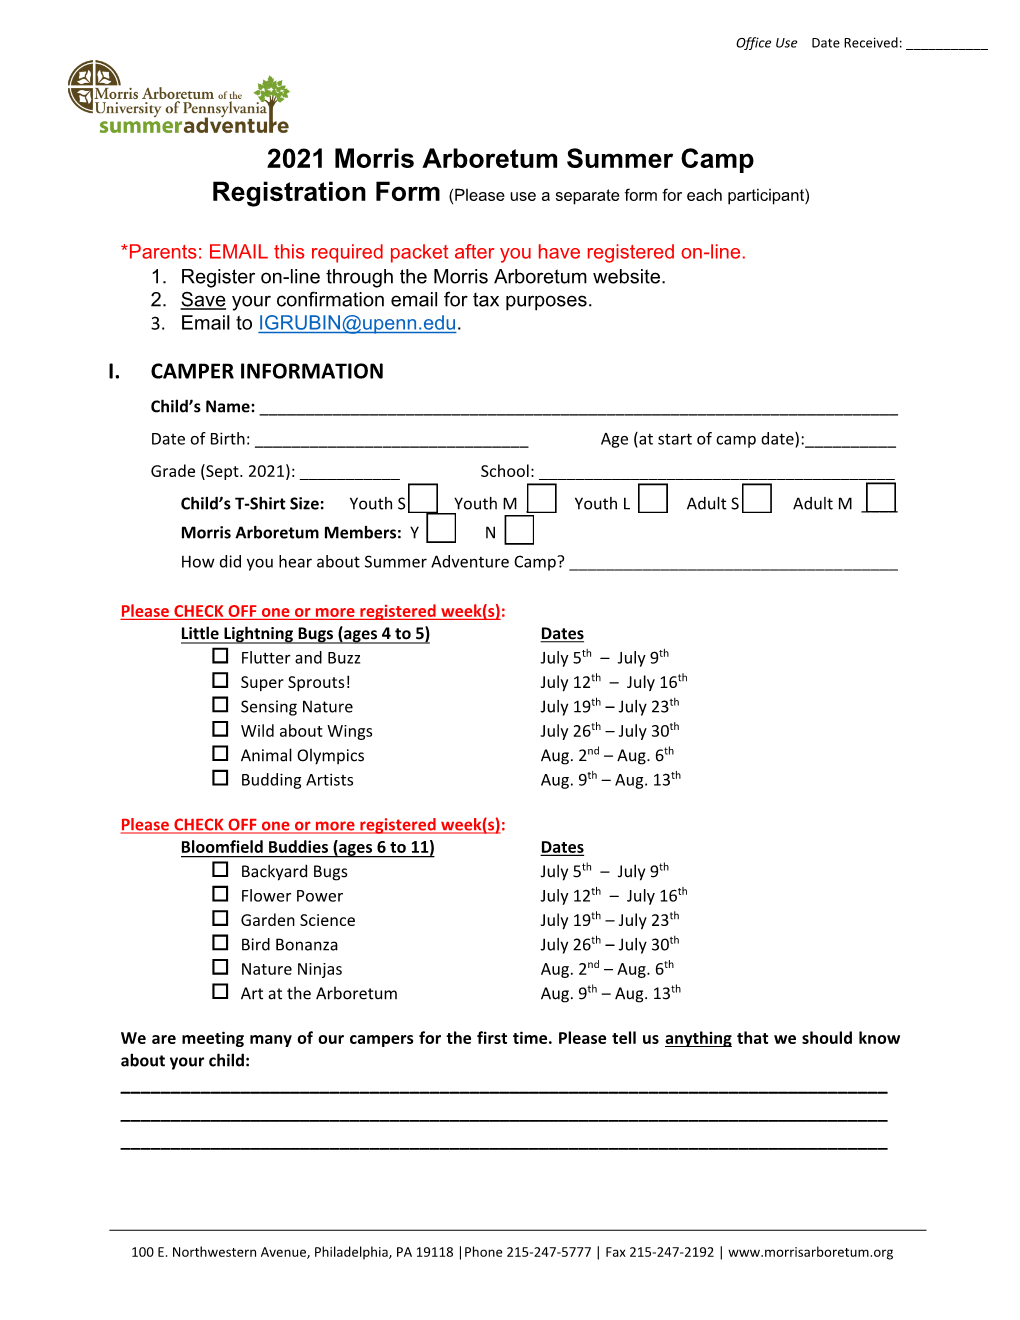 2021 Morris Arboretum Summer Camp Registration Form (Please Use a Separate Form for Each Participant)